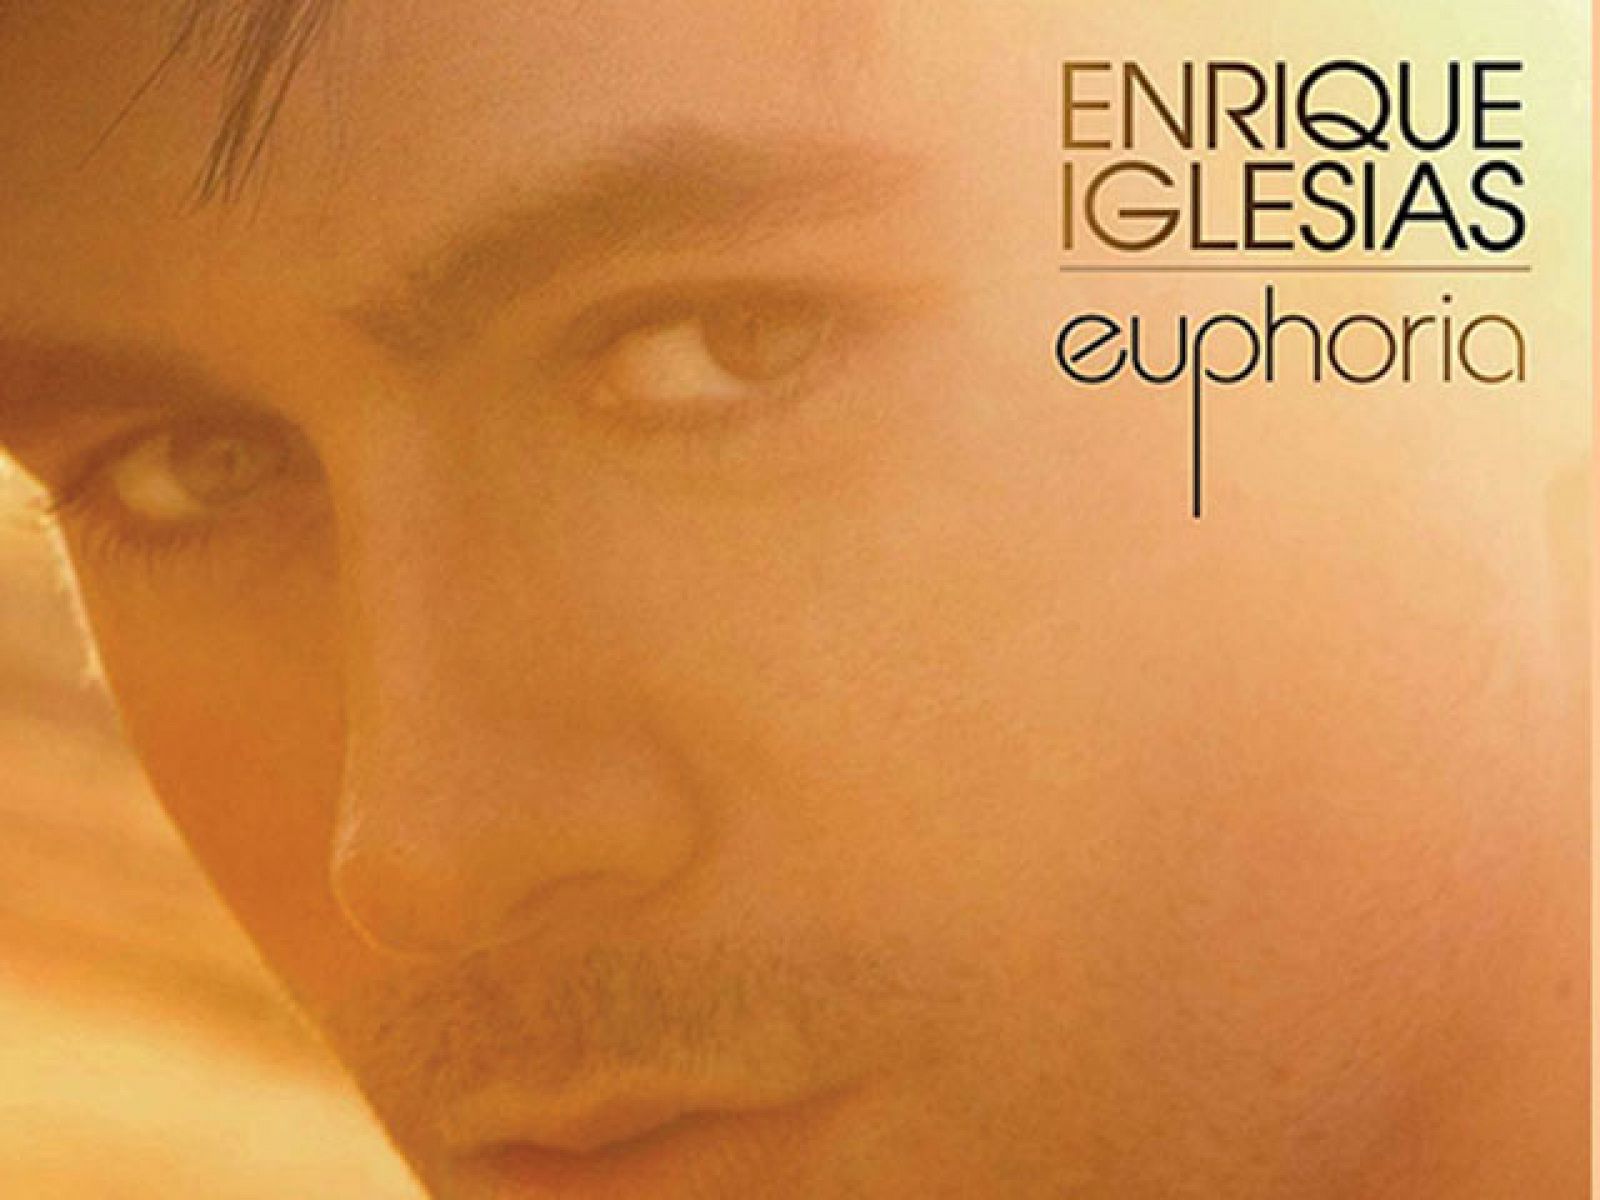 Disco del año 2010 - Enrique Iglesias - Euphoria